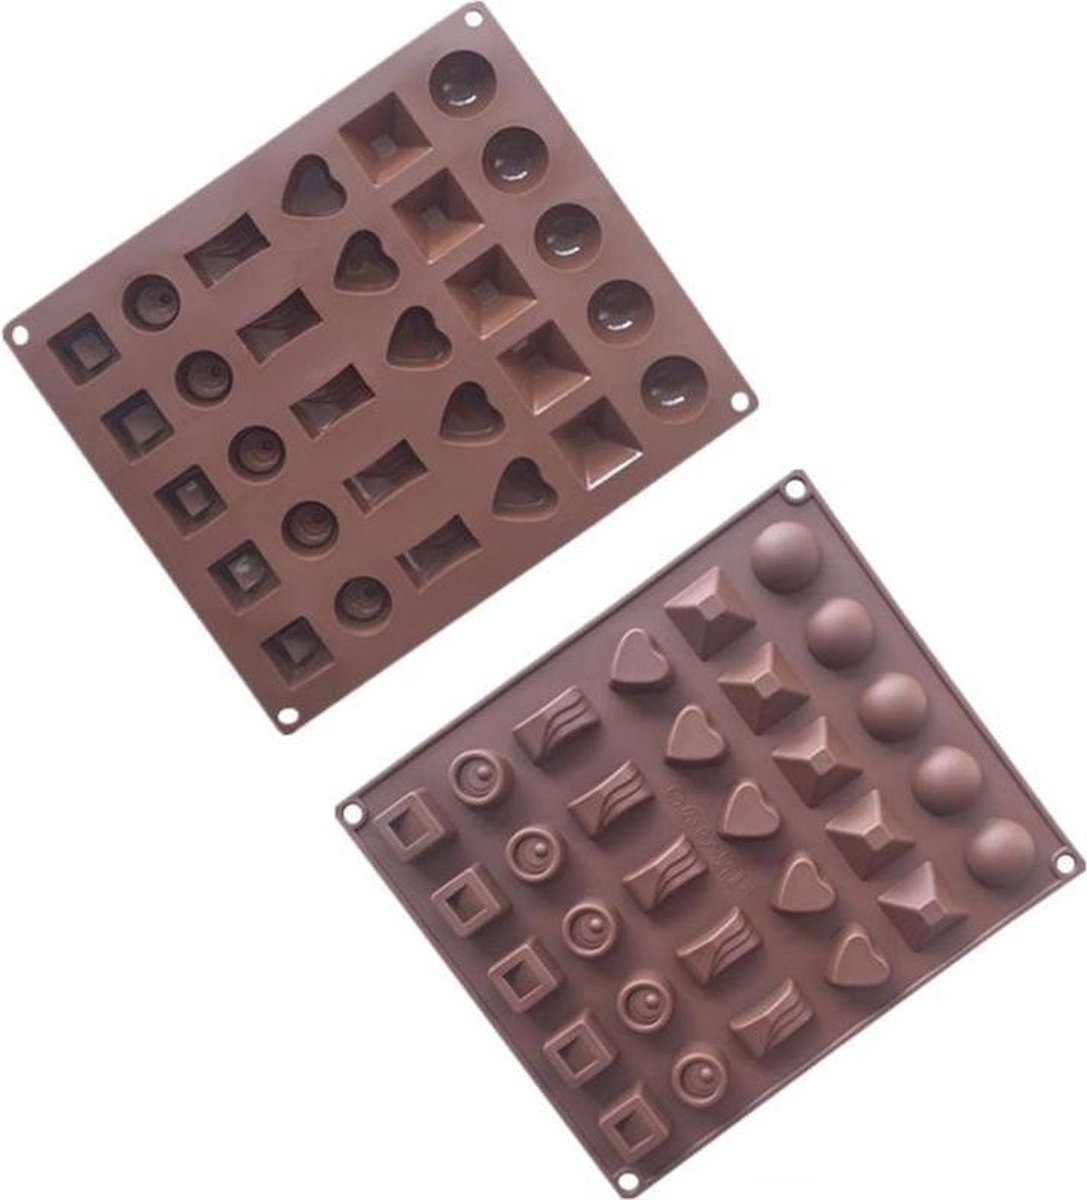 ProductGoods - Siliconen Chocoladevorm Groot - Bonbonvorm - Ijsblokjesvorm